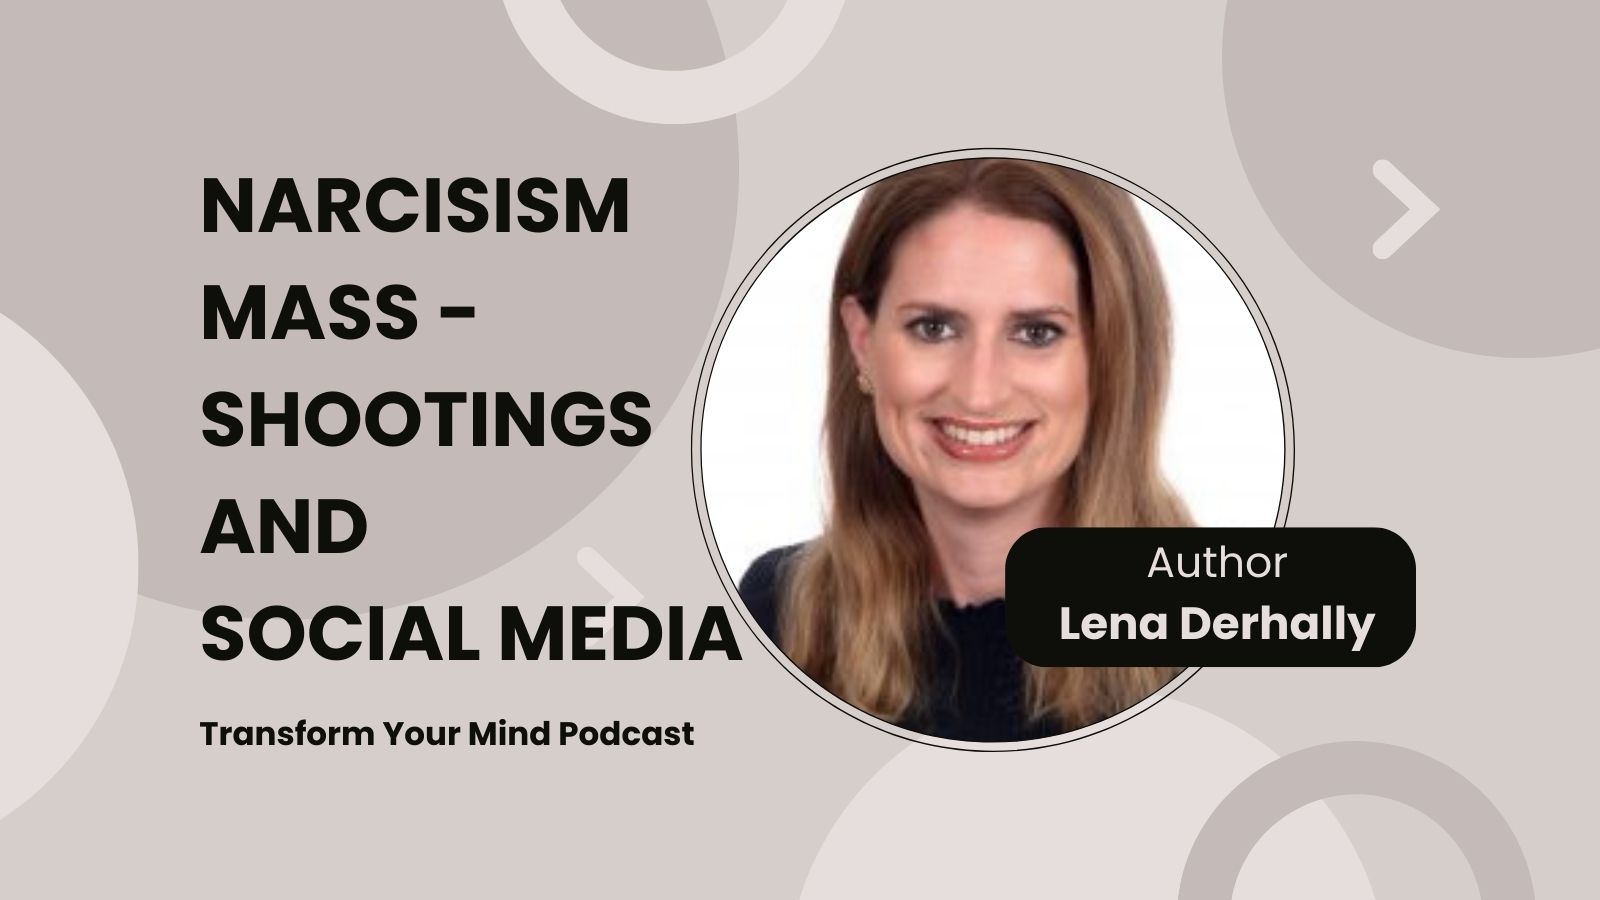 Narcissism social media and mass shootings